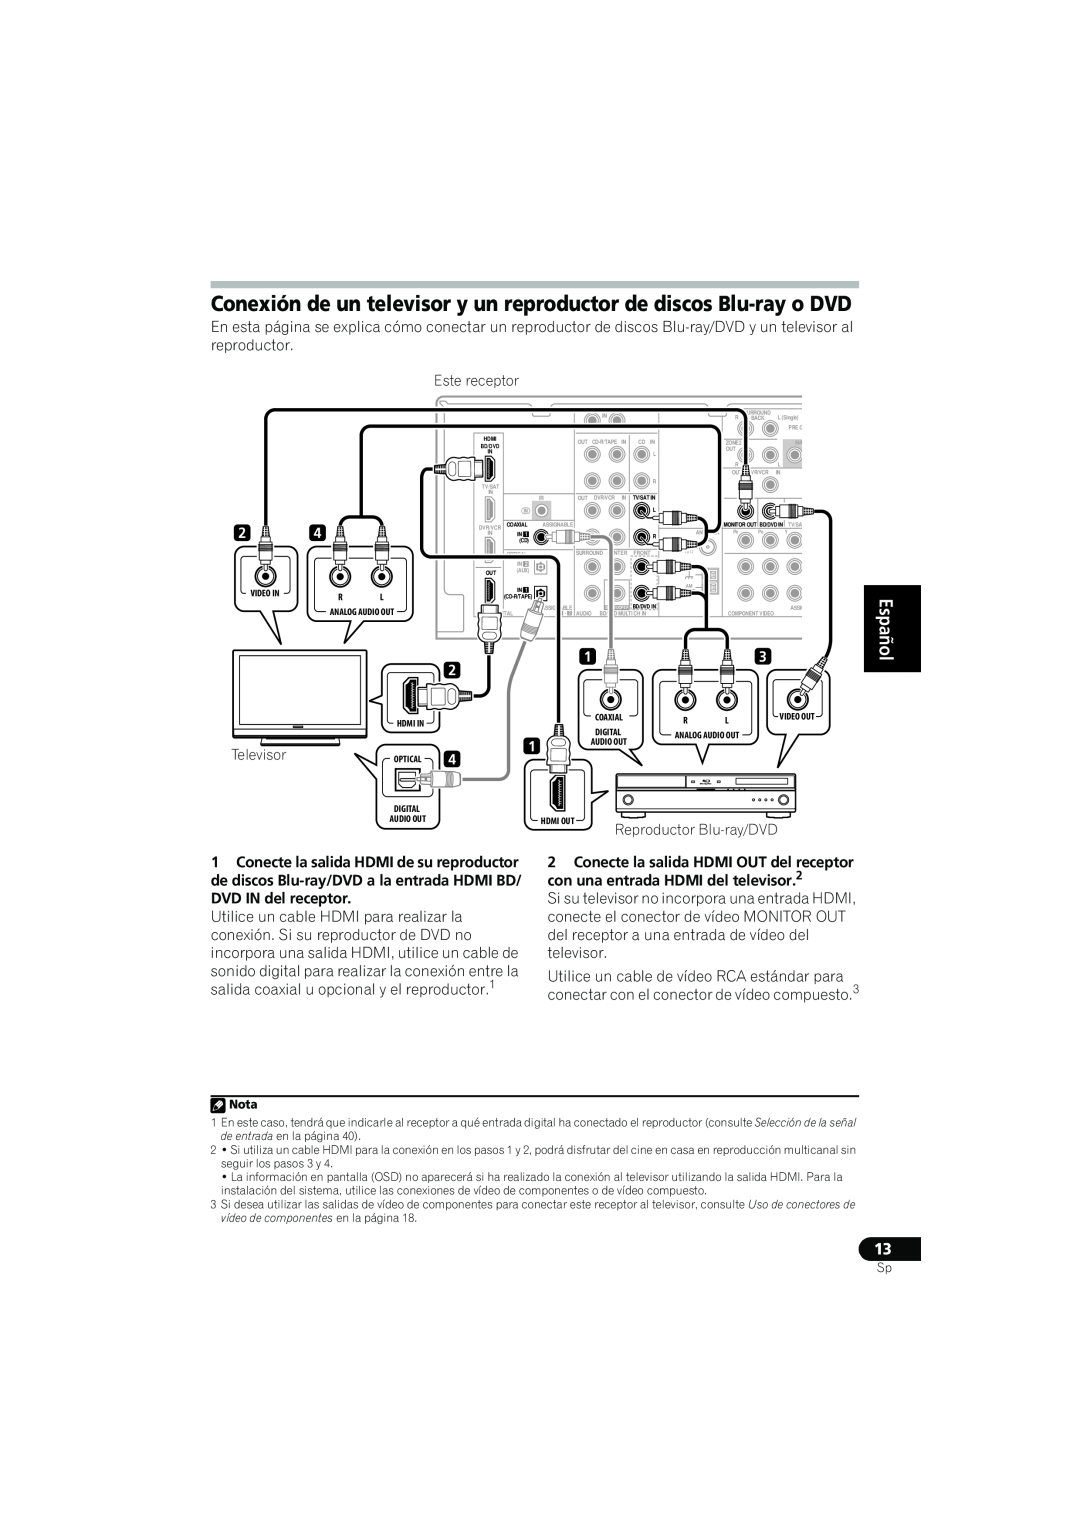 Pioneer VSX-819H-S manual English, Televisor, Reproductor Blu-ray/DVD 